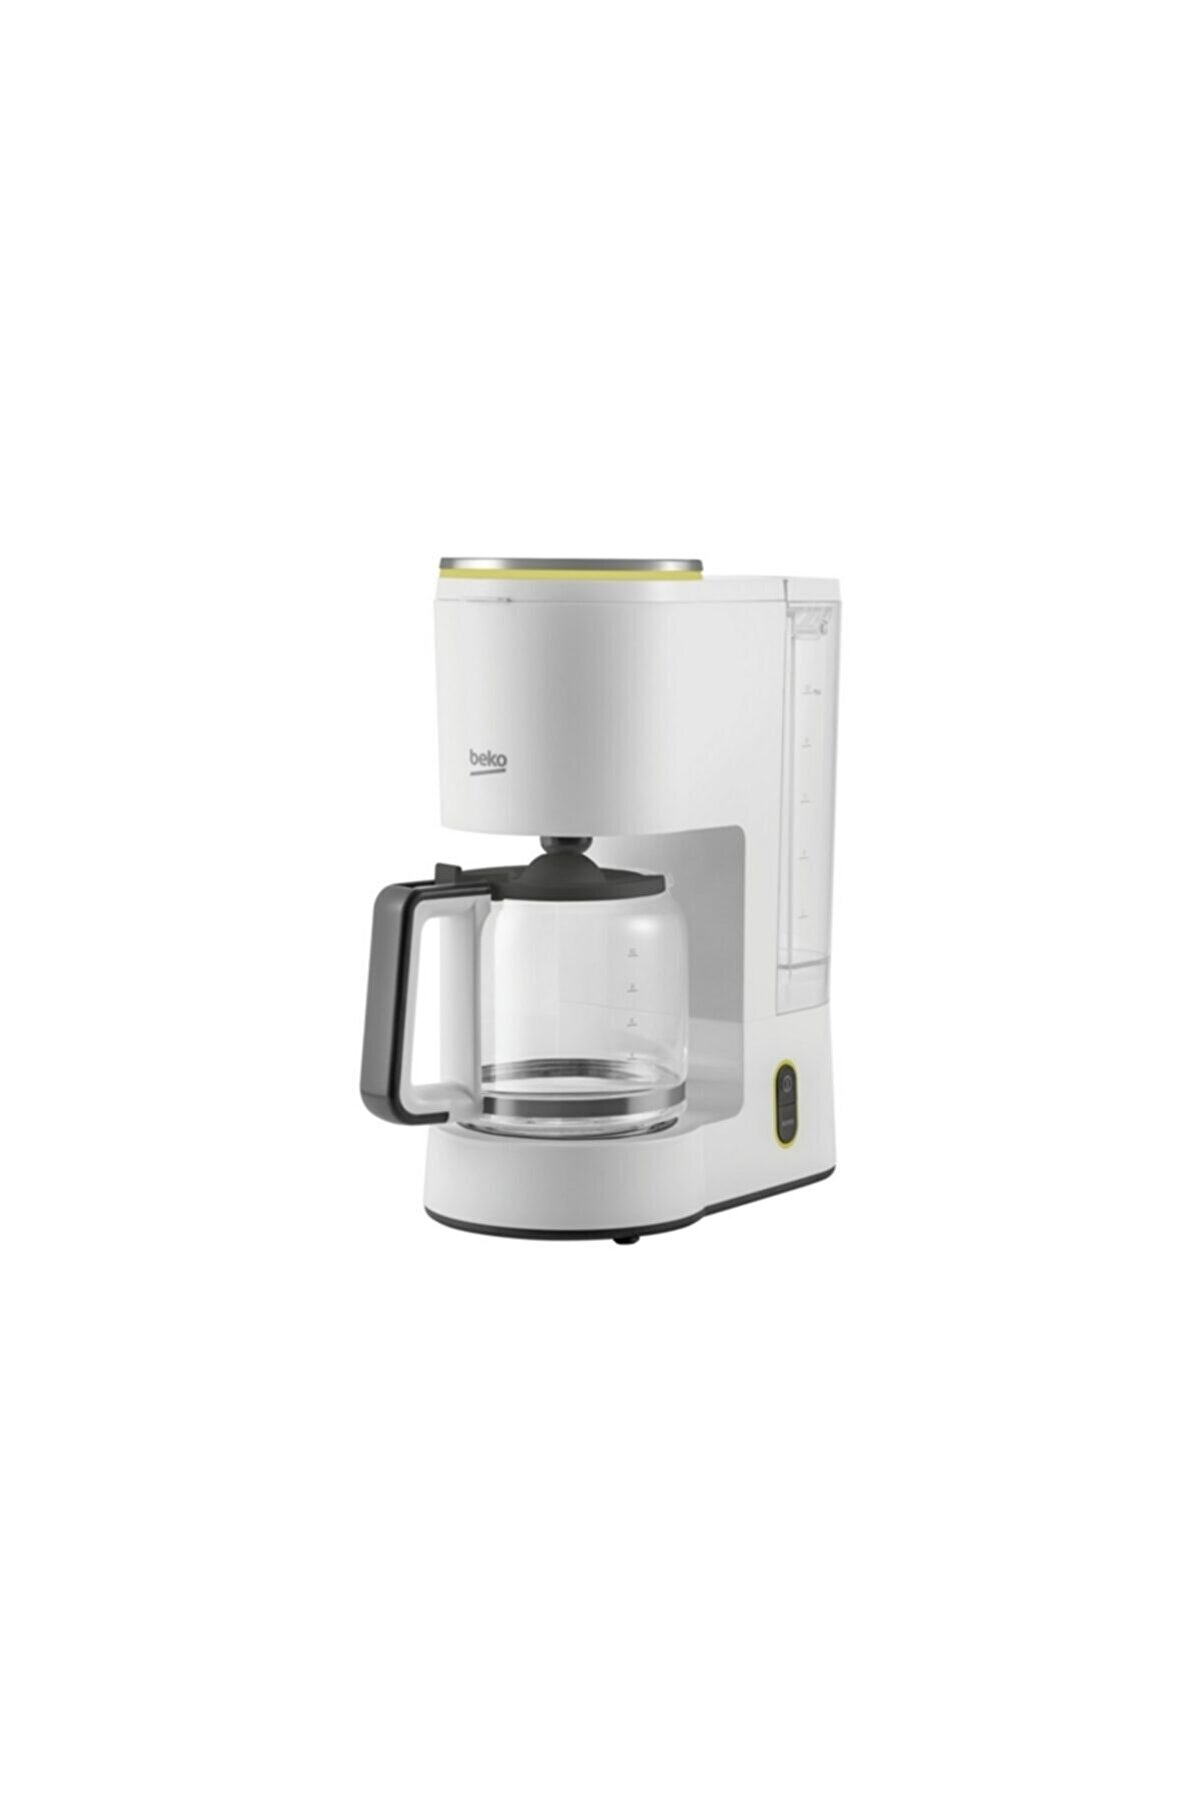 Beko Fk 5910 Filtre Kahve Makinesi Garantili